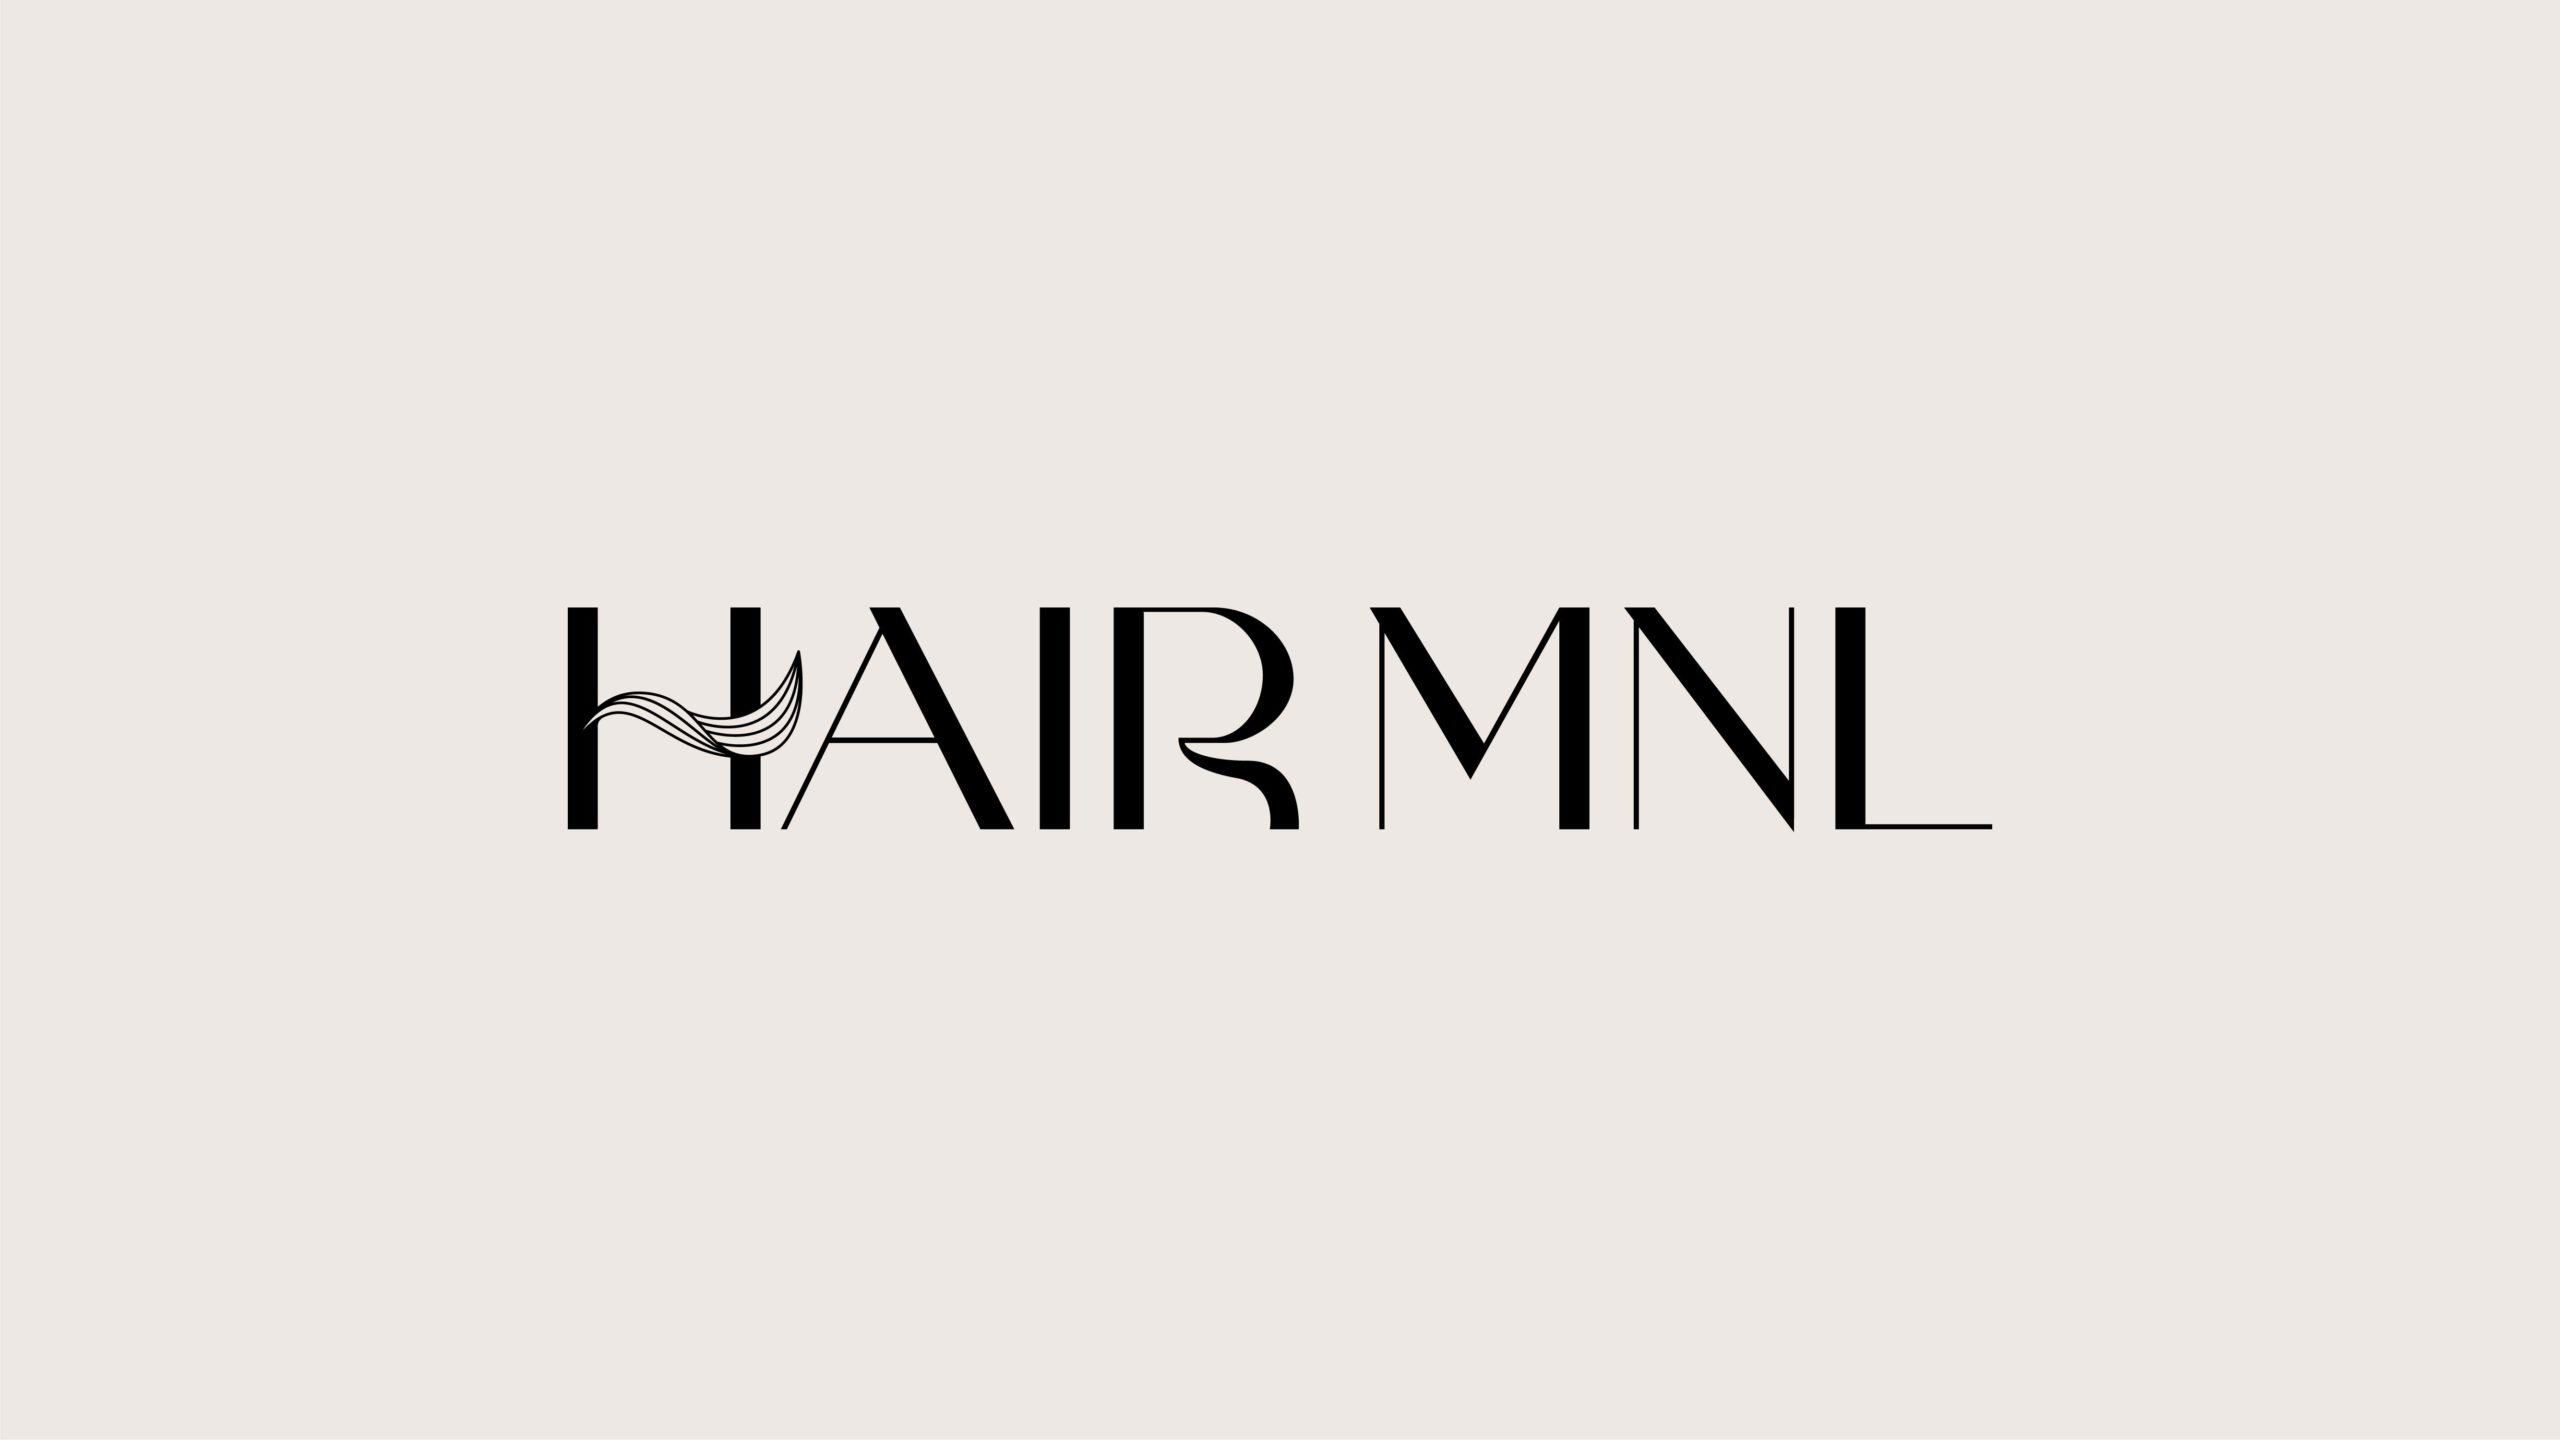 Minimalist logo designed for professional haircare brand HairMNL